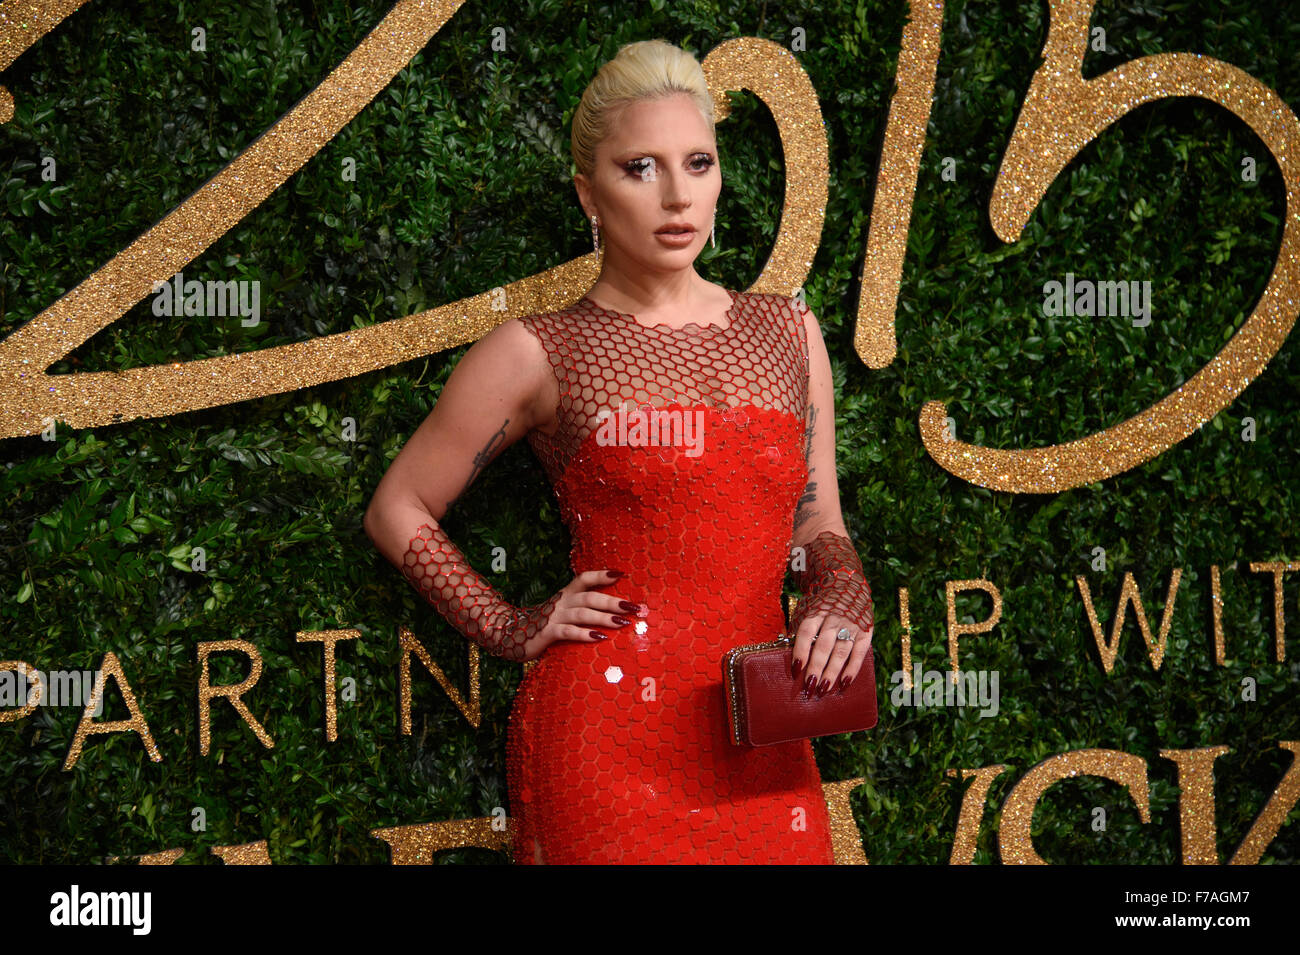 Lady Gaga at the British Fashion Awards 2015 in London Stock Photo